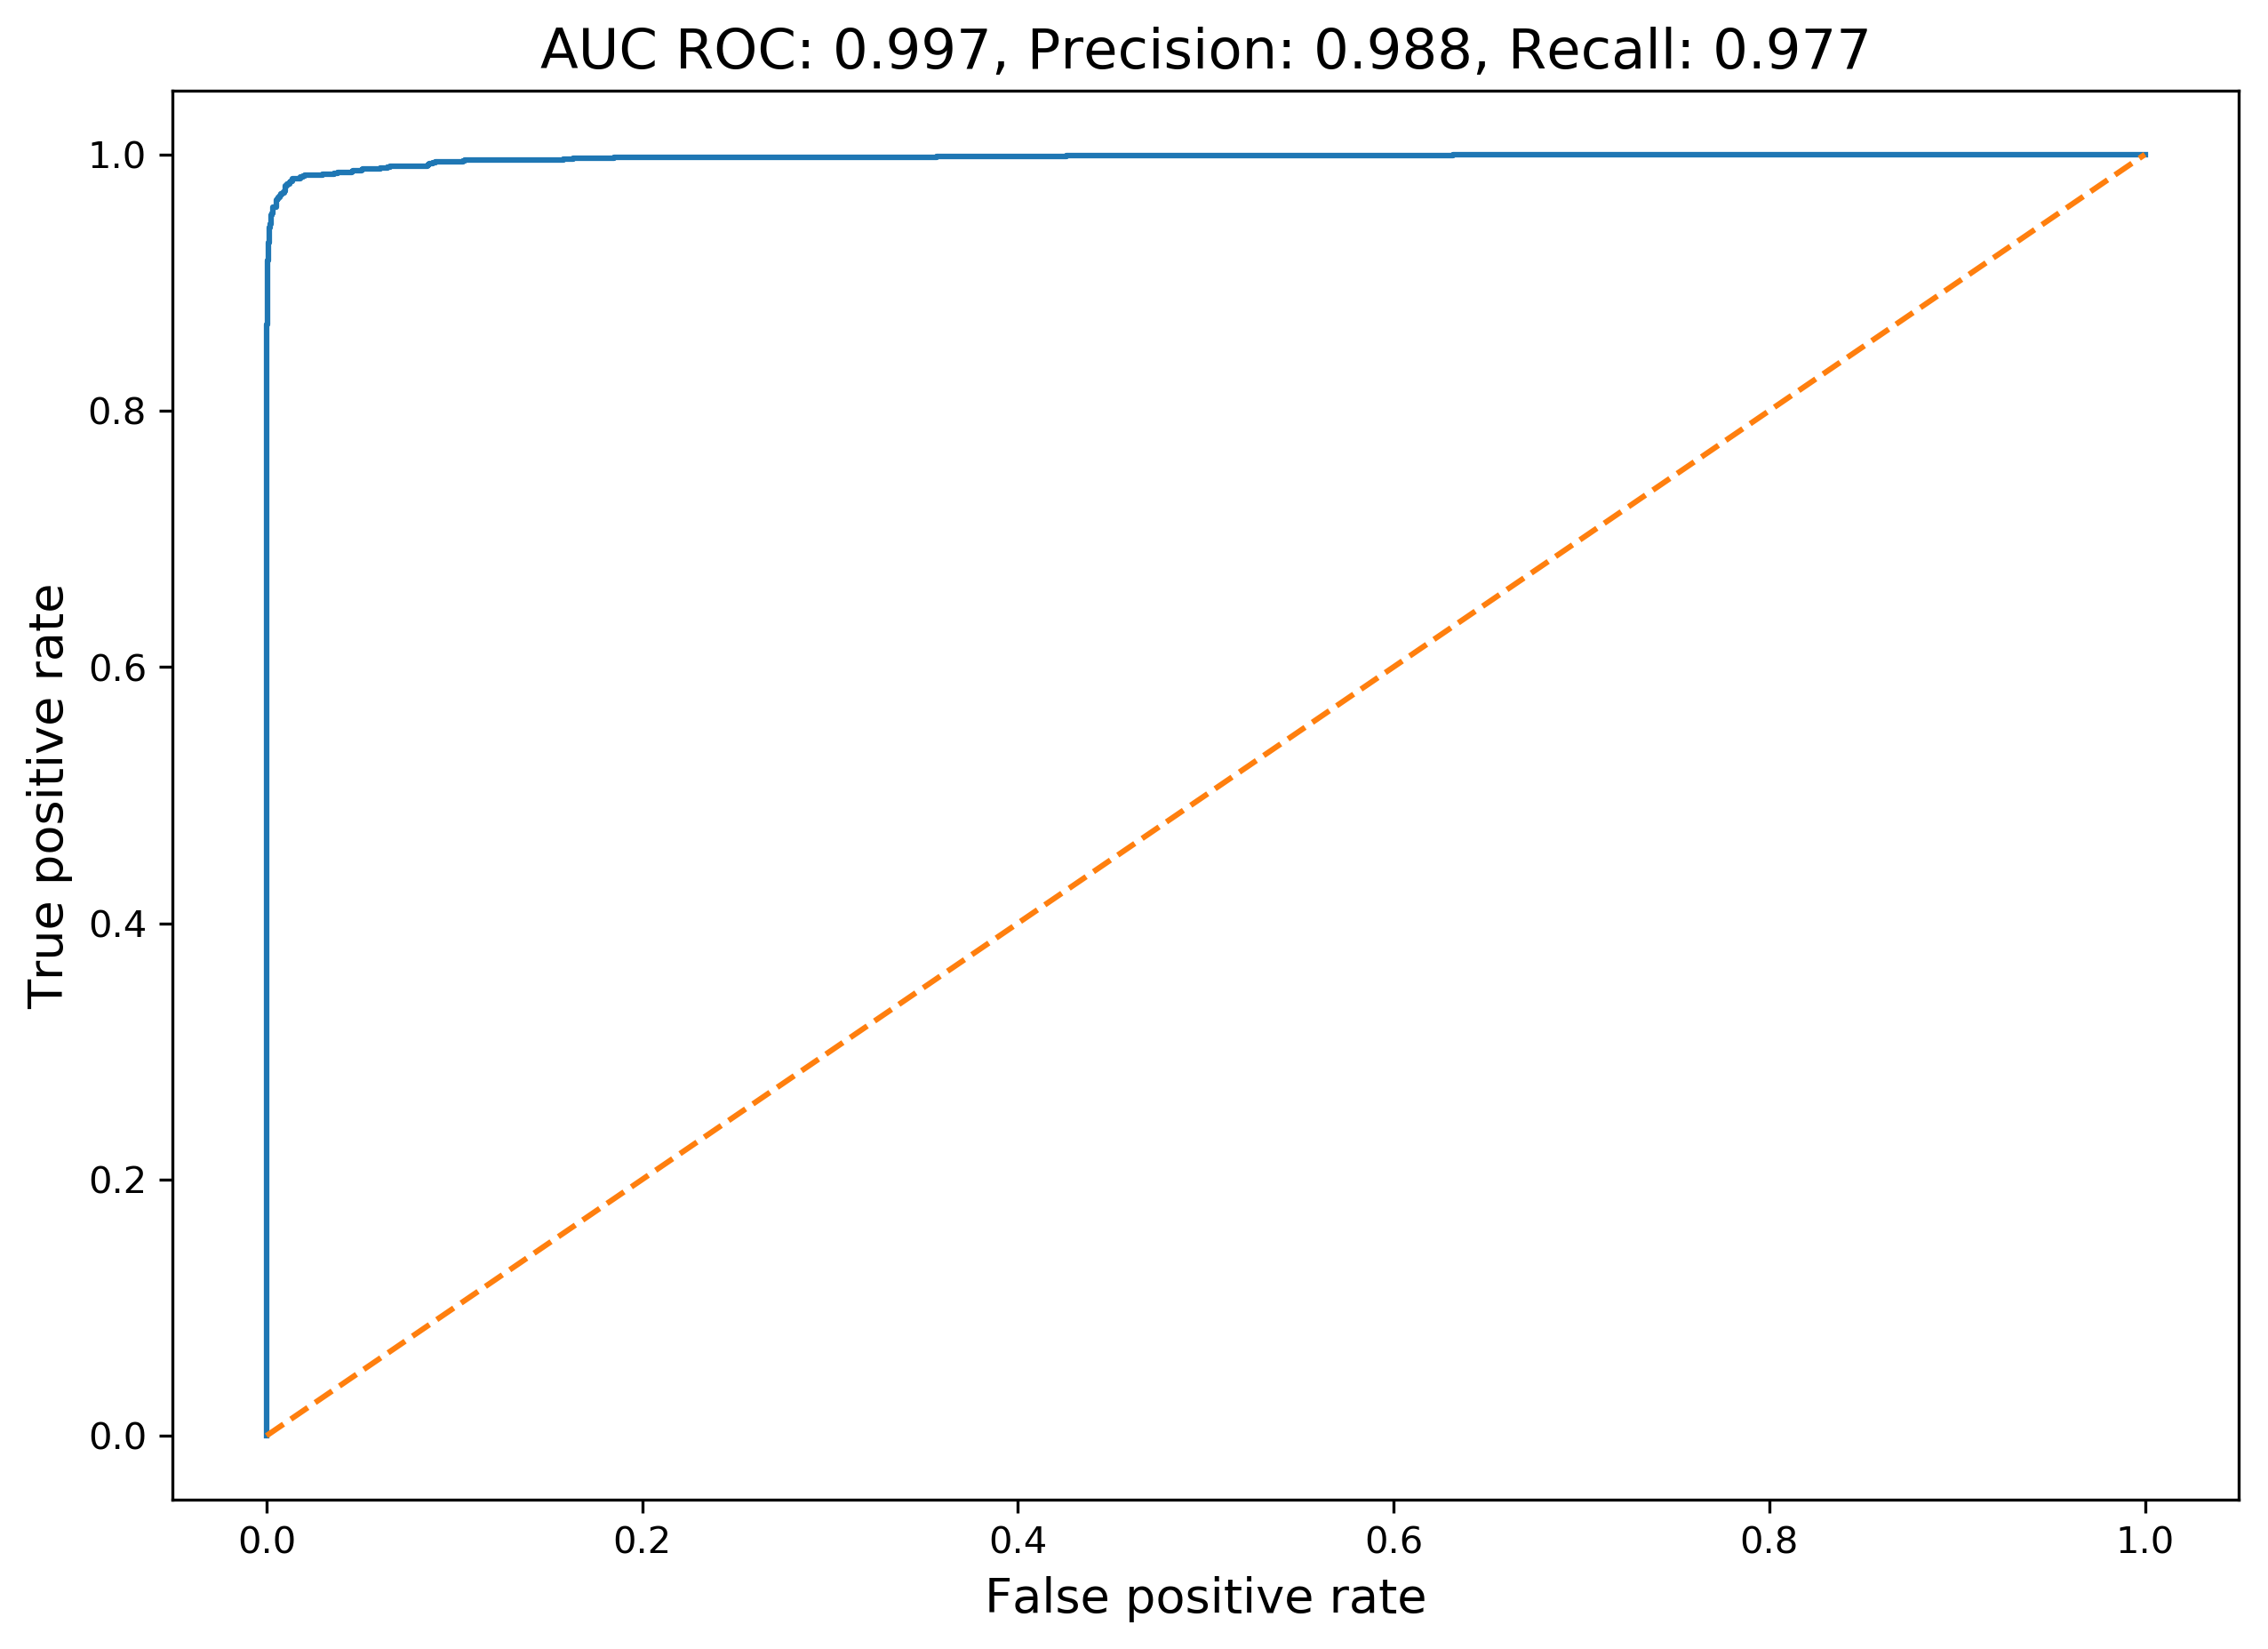 AUC ROC results